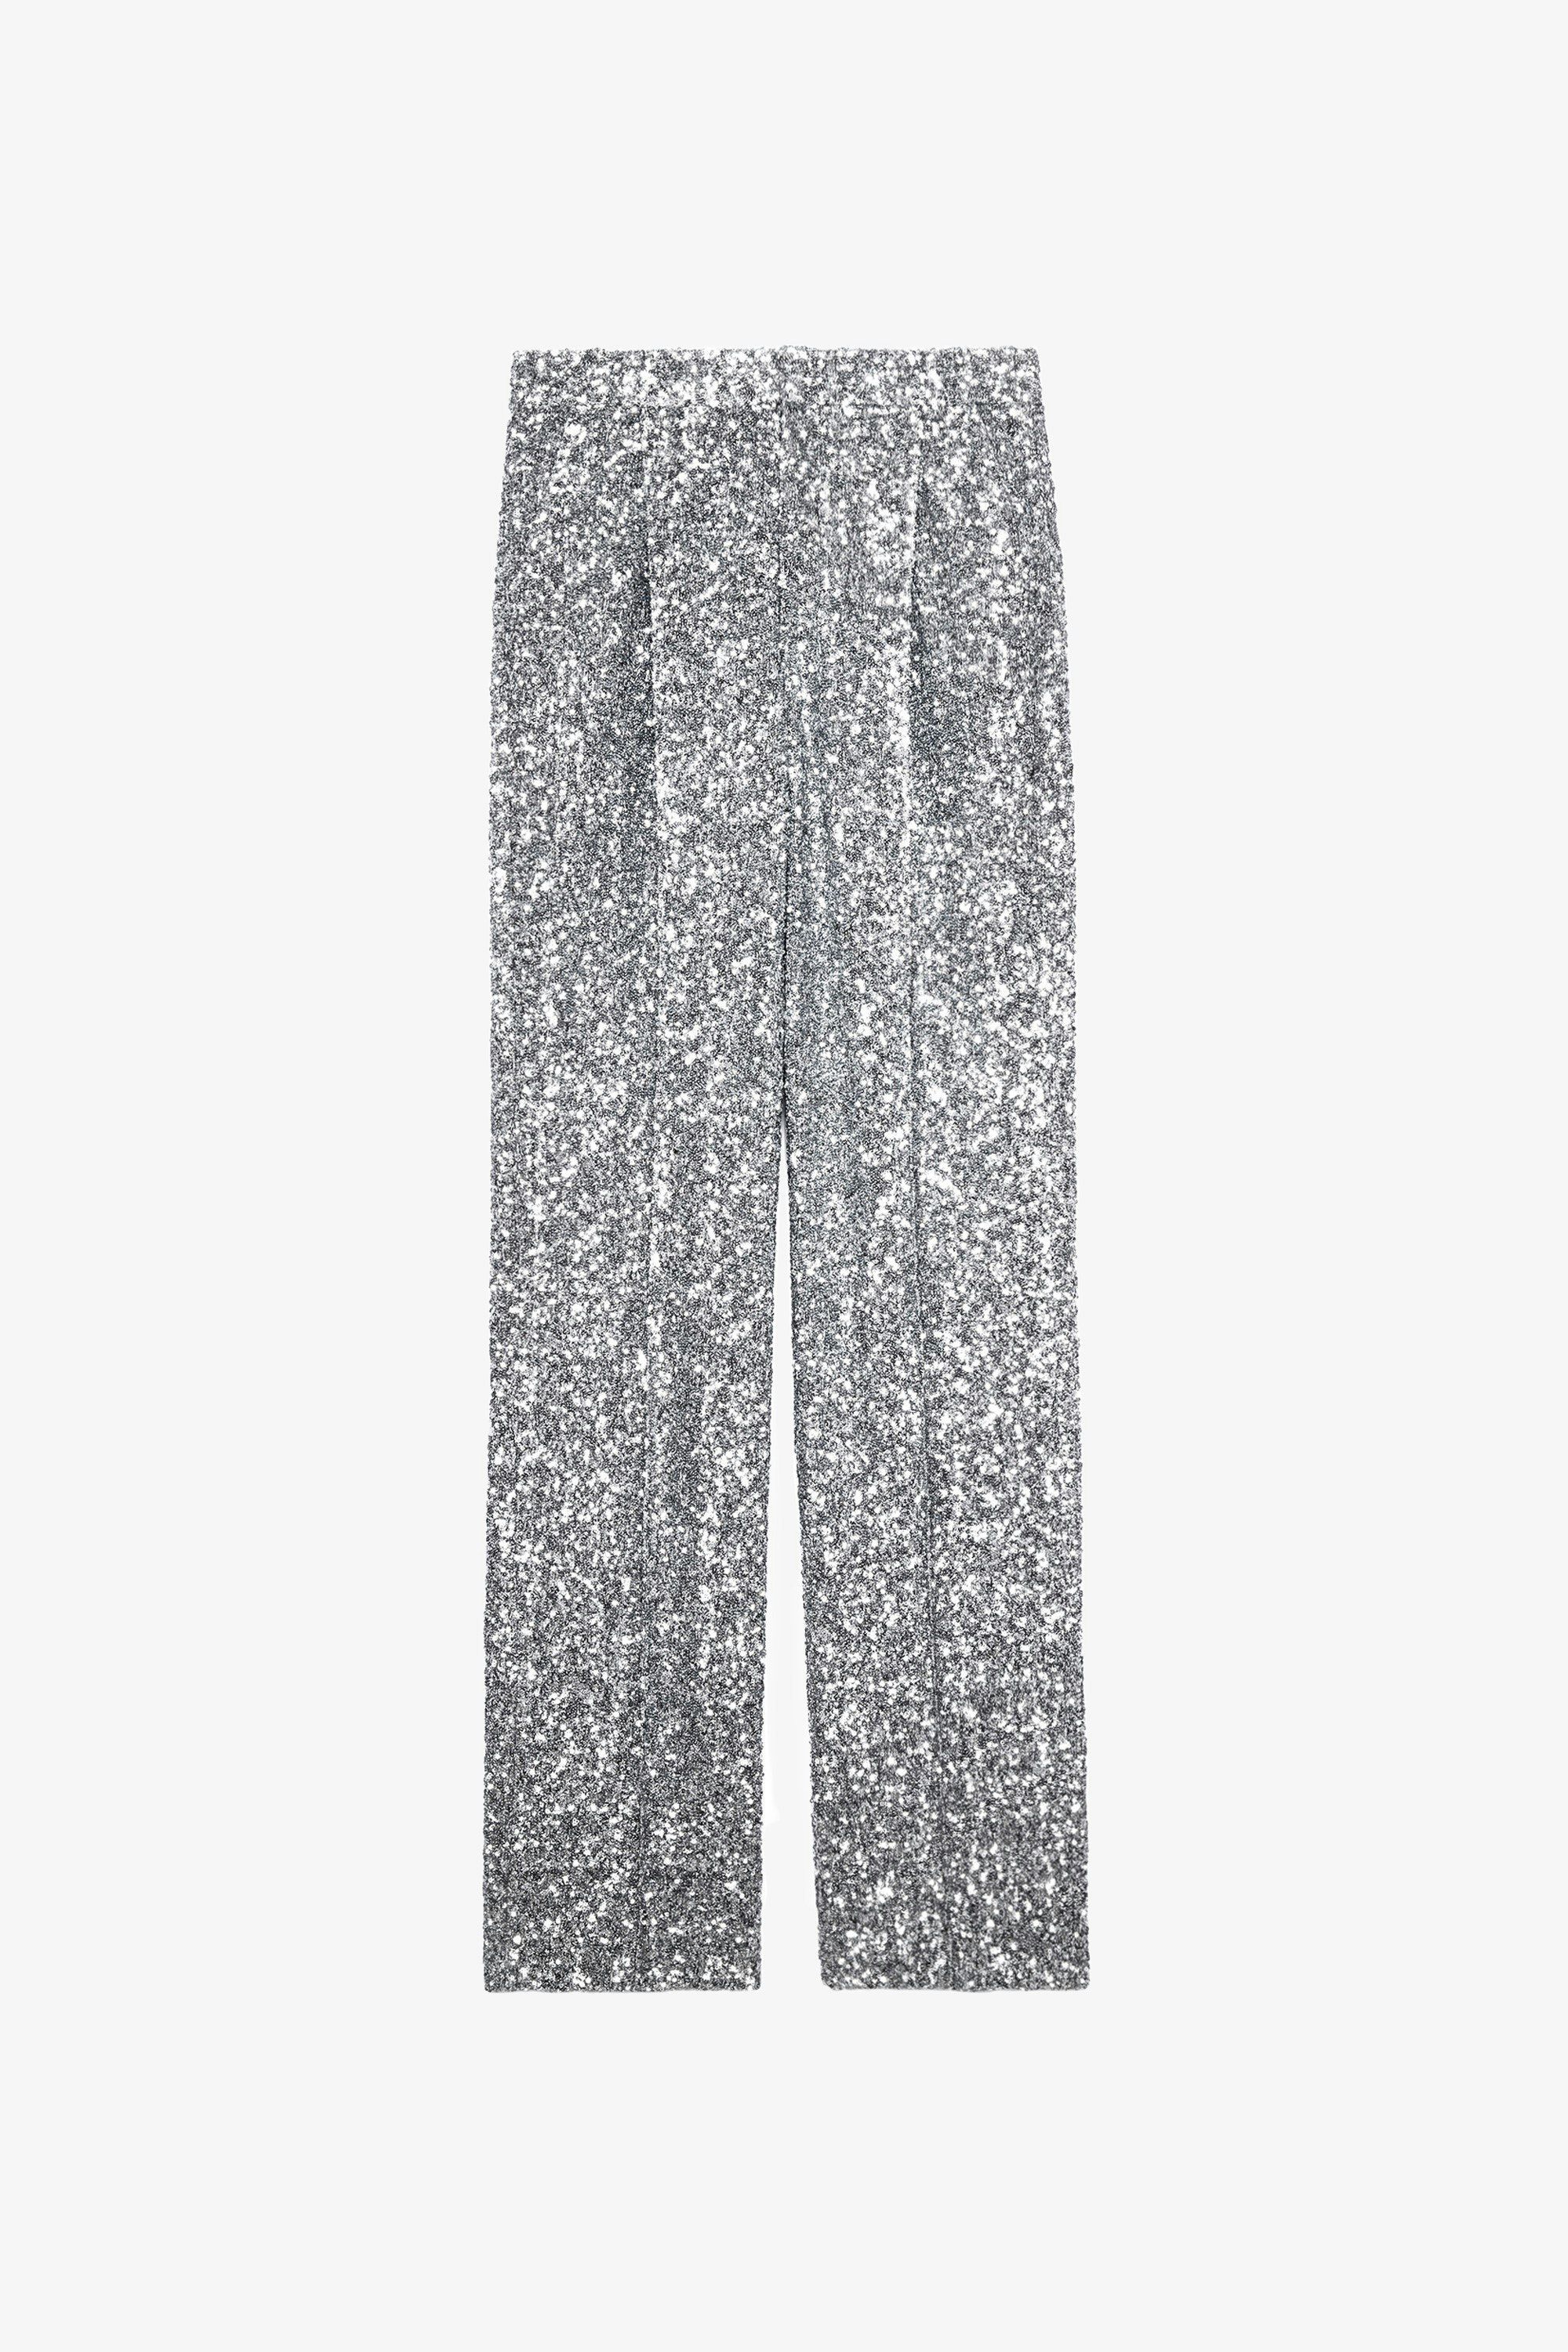 Gitane Sequins パンツ Women's grey sequinned suit trousers.